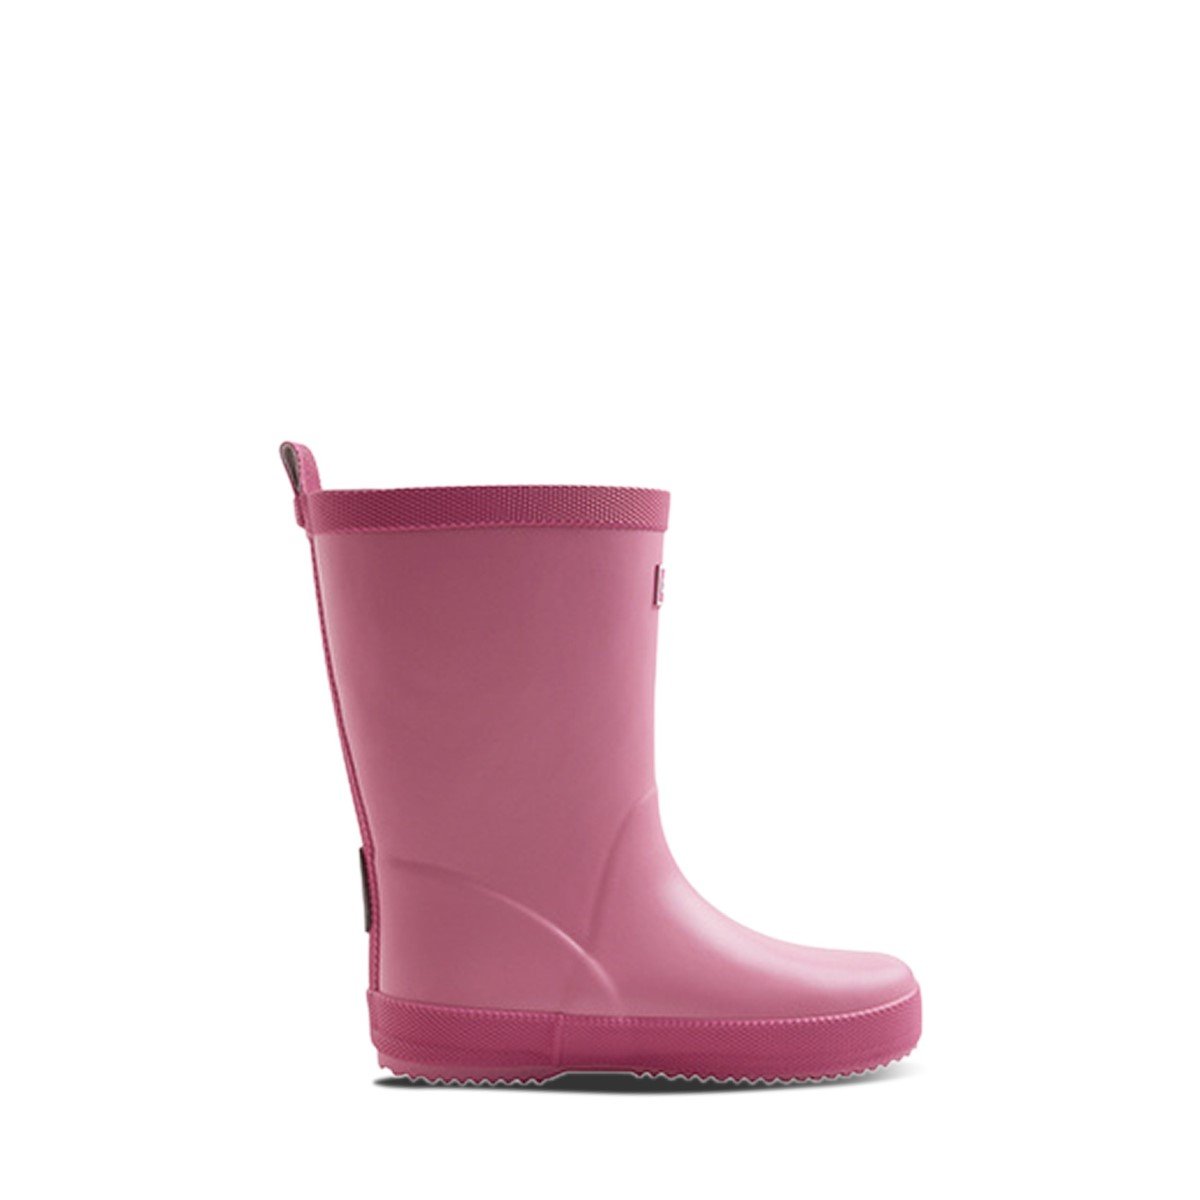 Toddler's Taika Rain Boots in Pink